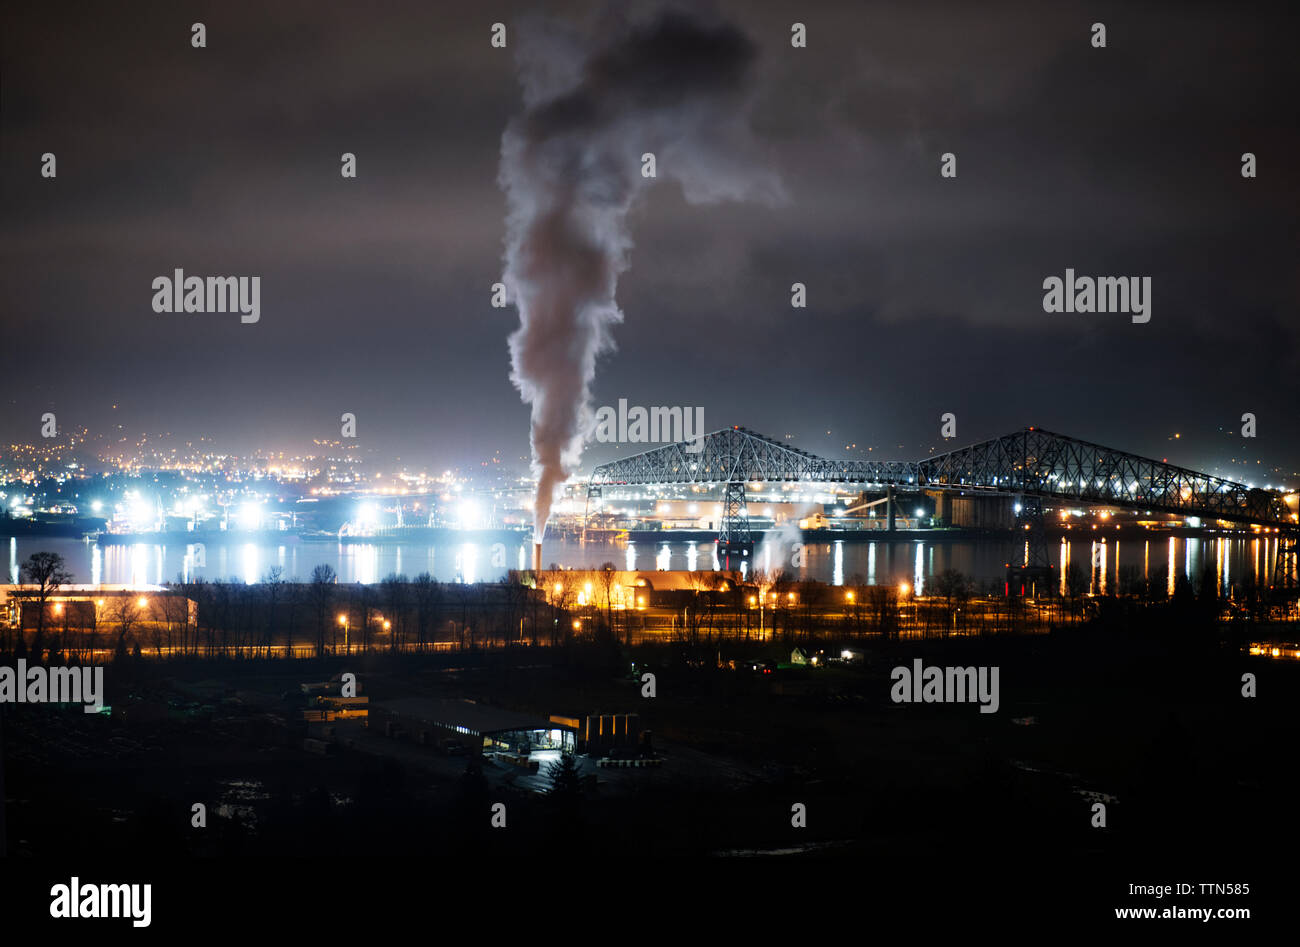 Smoke emitting from chimney at factory in illuminated city at night Stock Photo